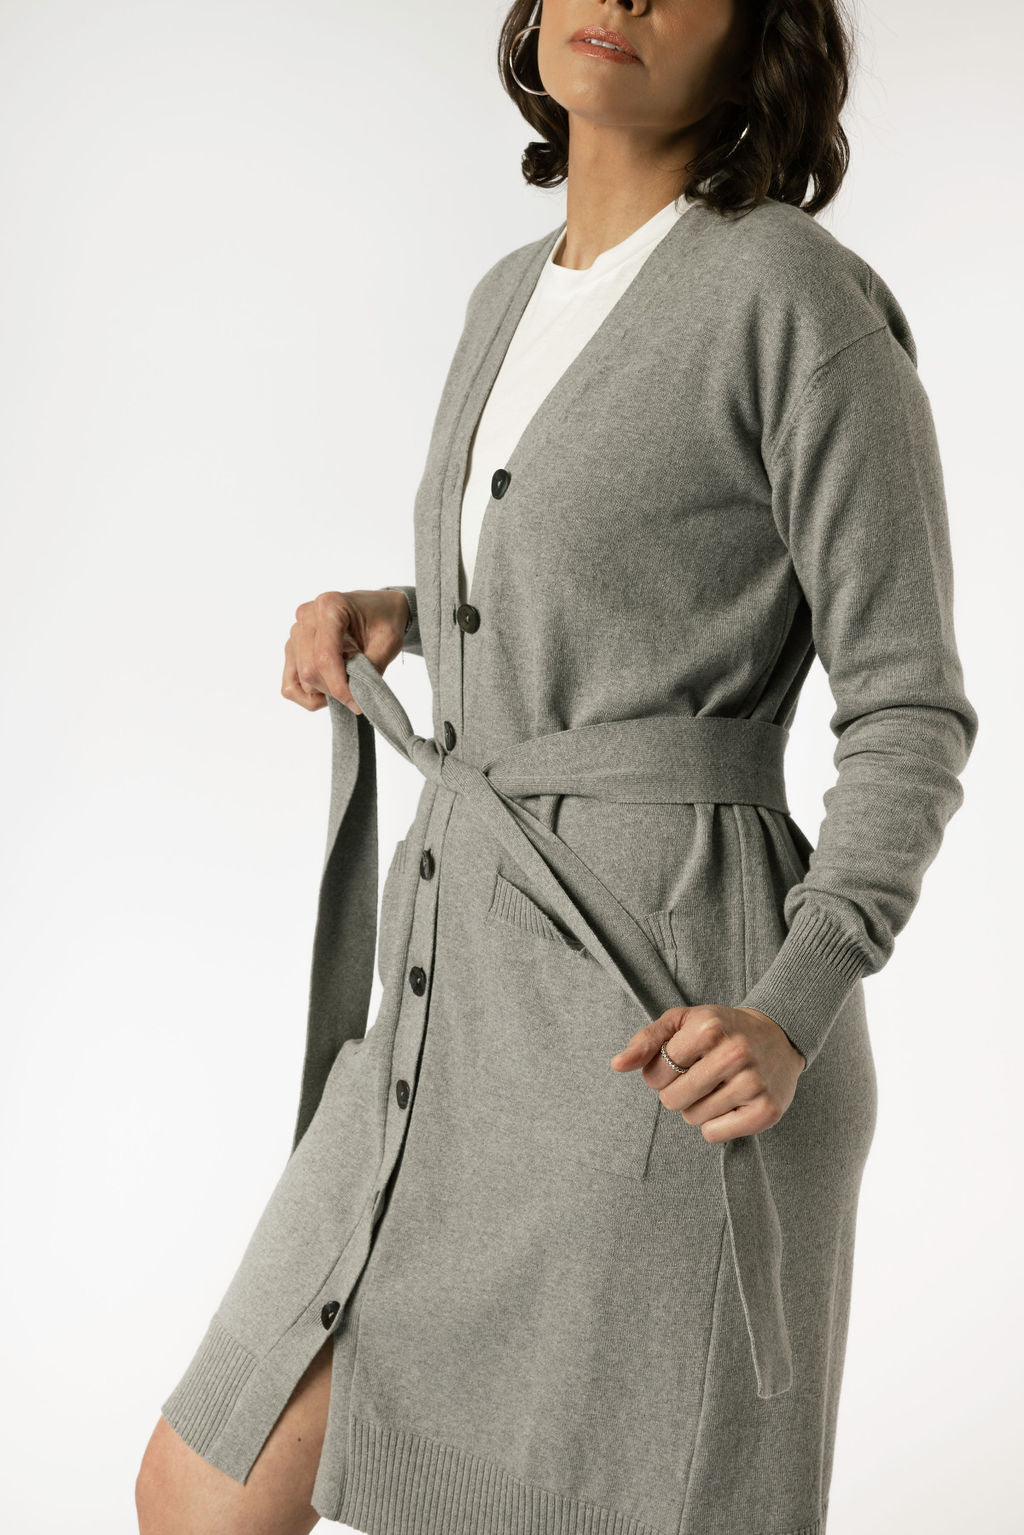 Minimalist Capsule Wardrobe 100% Organic Cotton Gray Cardigan Sweater Dress With Cotton Belt